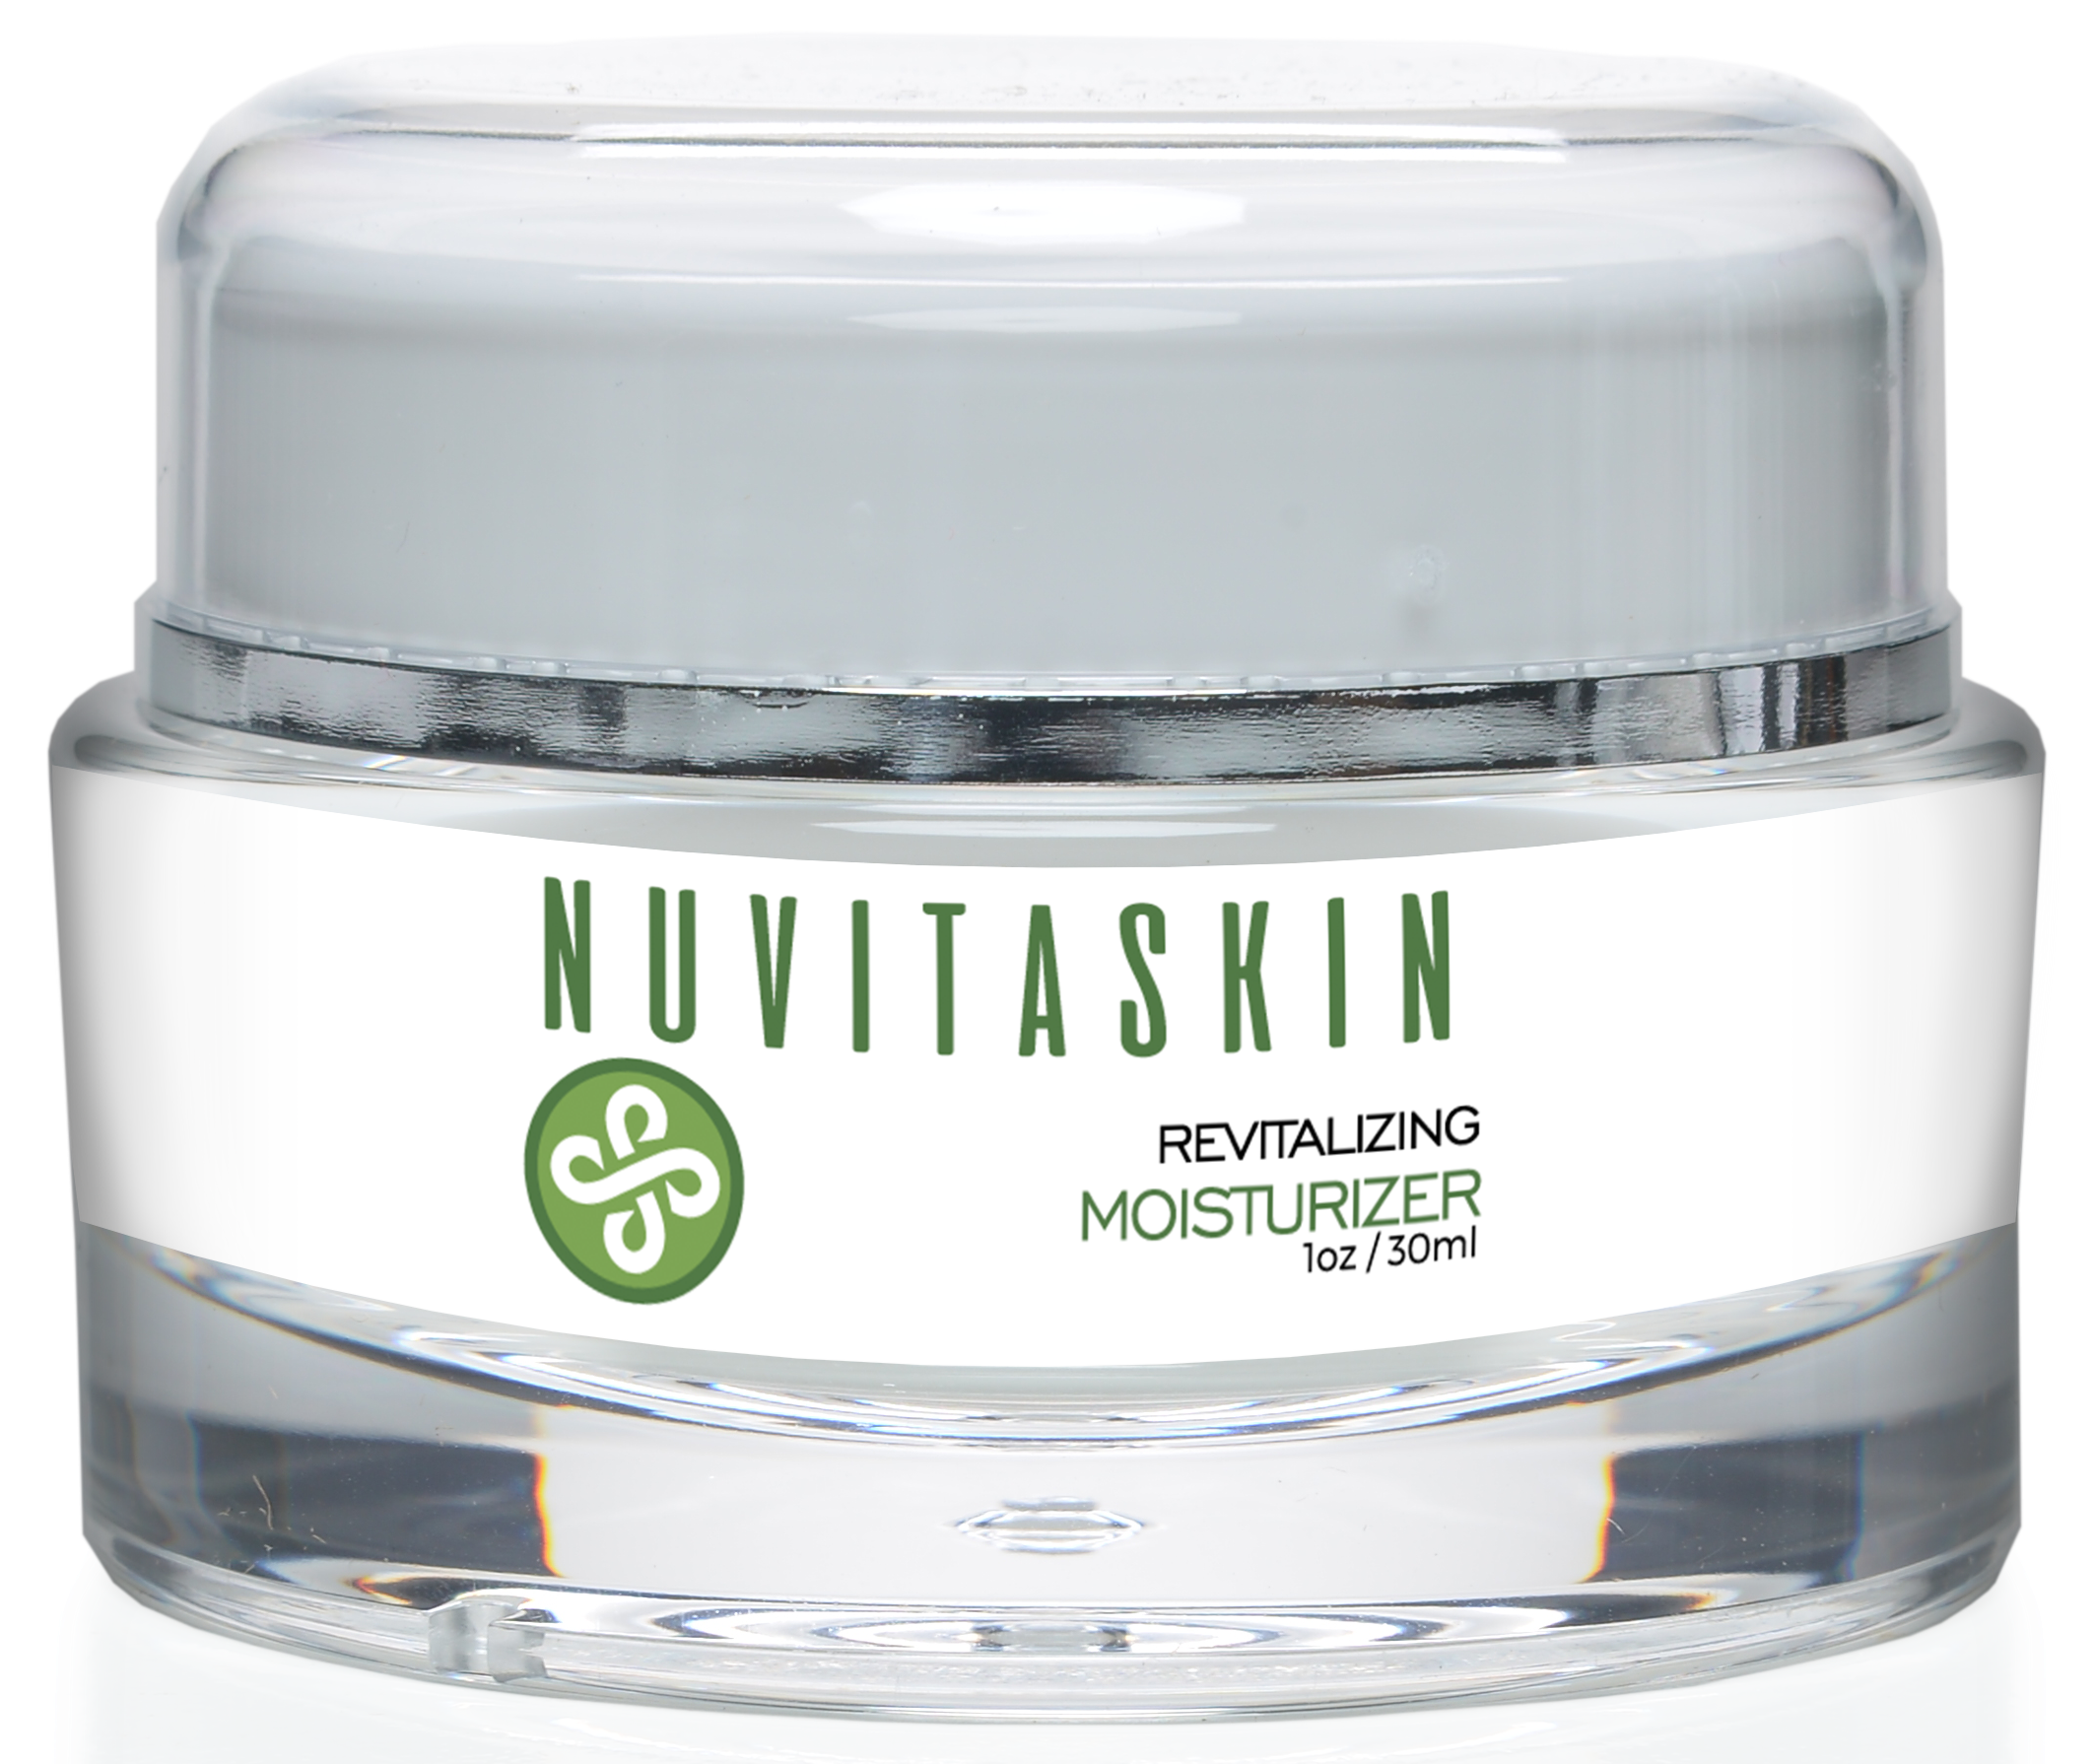 NuVita Skin Revitalizing Moisturizer - Premium Skincare - Advanced Formula to Diminish Fine Lines and Wrinkles - image 1 of 2